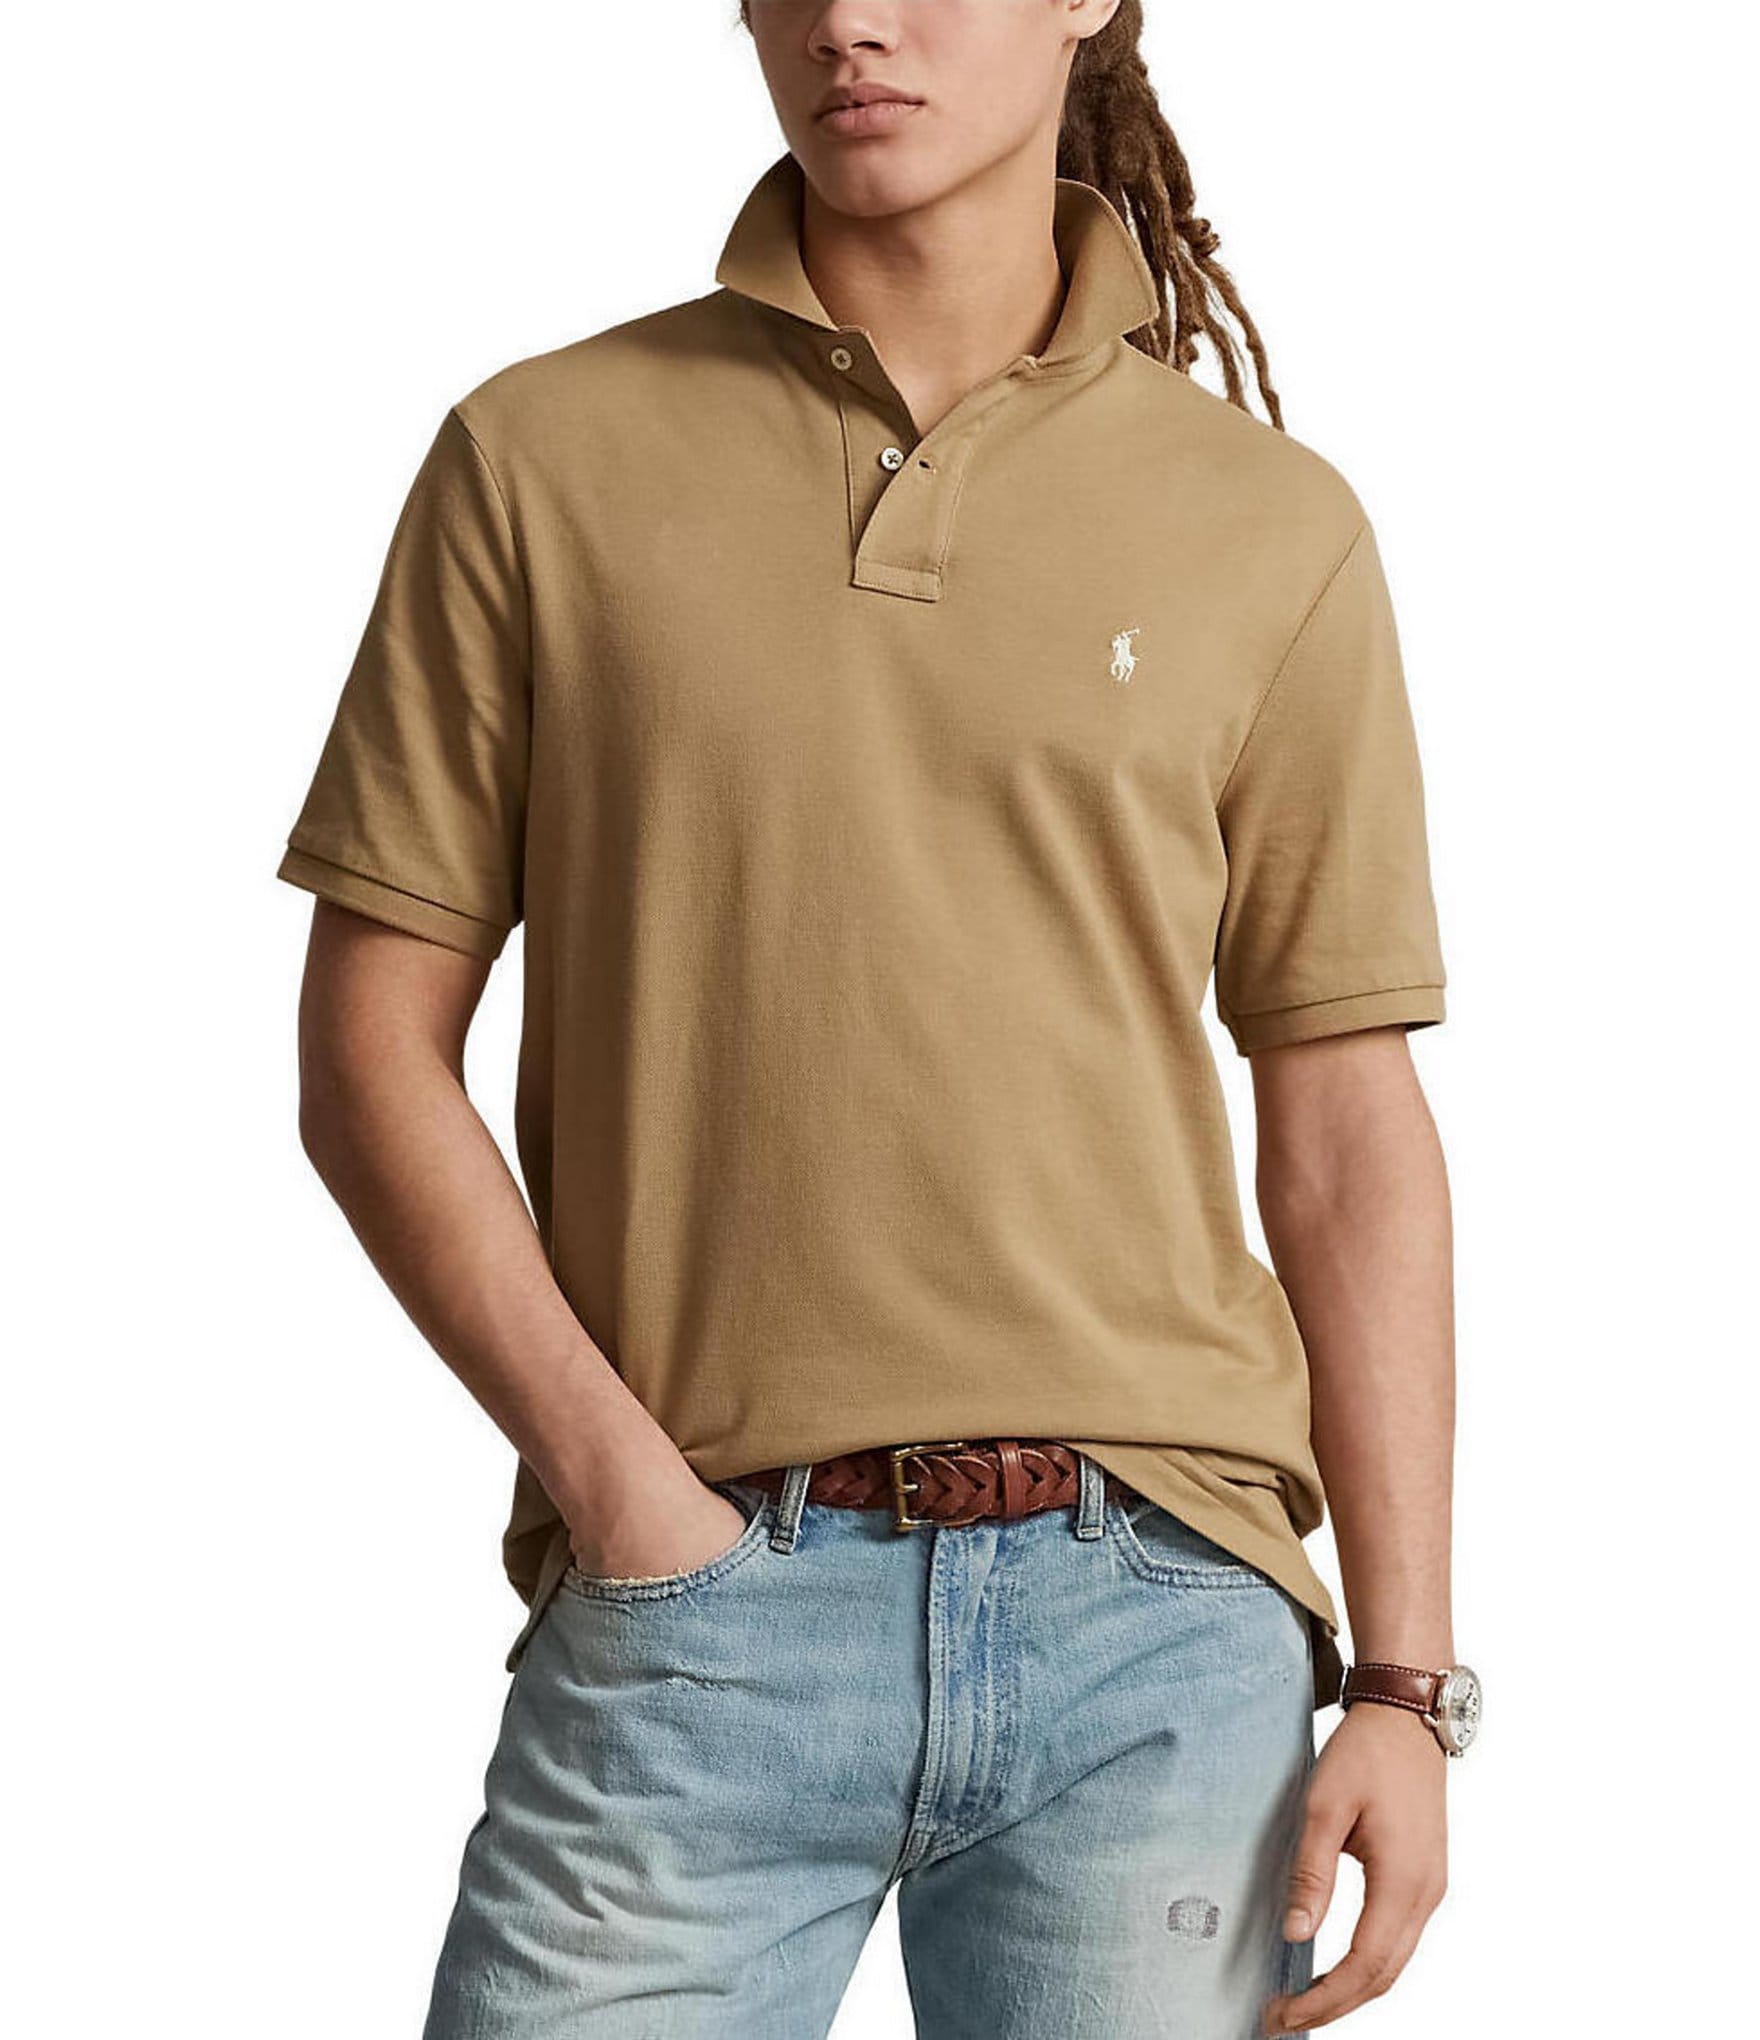 Polo Ralph Lauren Custom-Slim Fit Solid Mesh Shirt | Dillard's